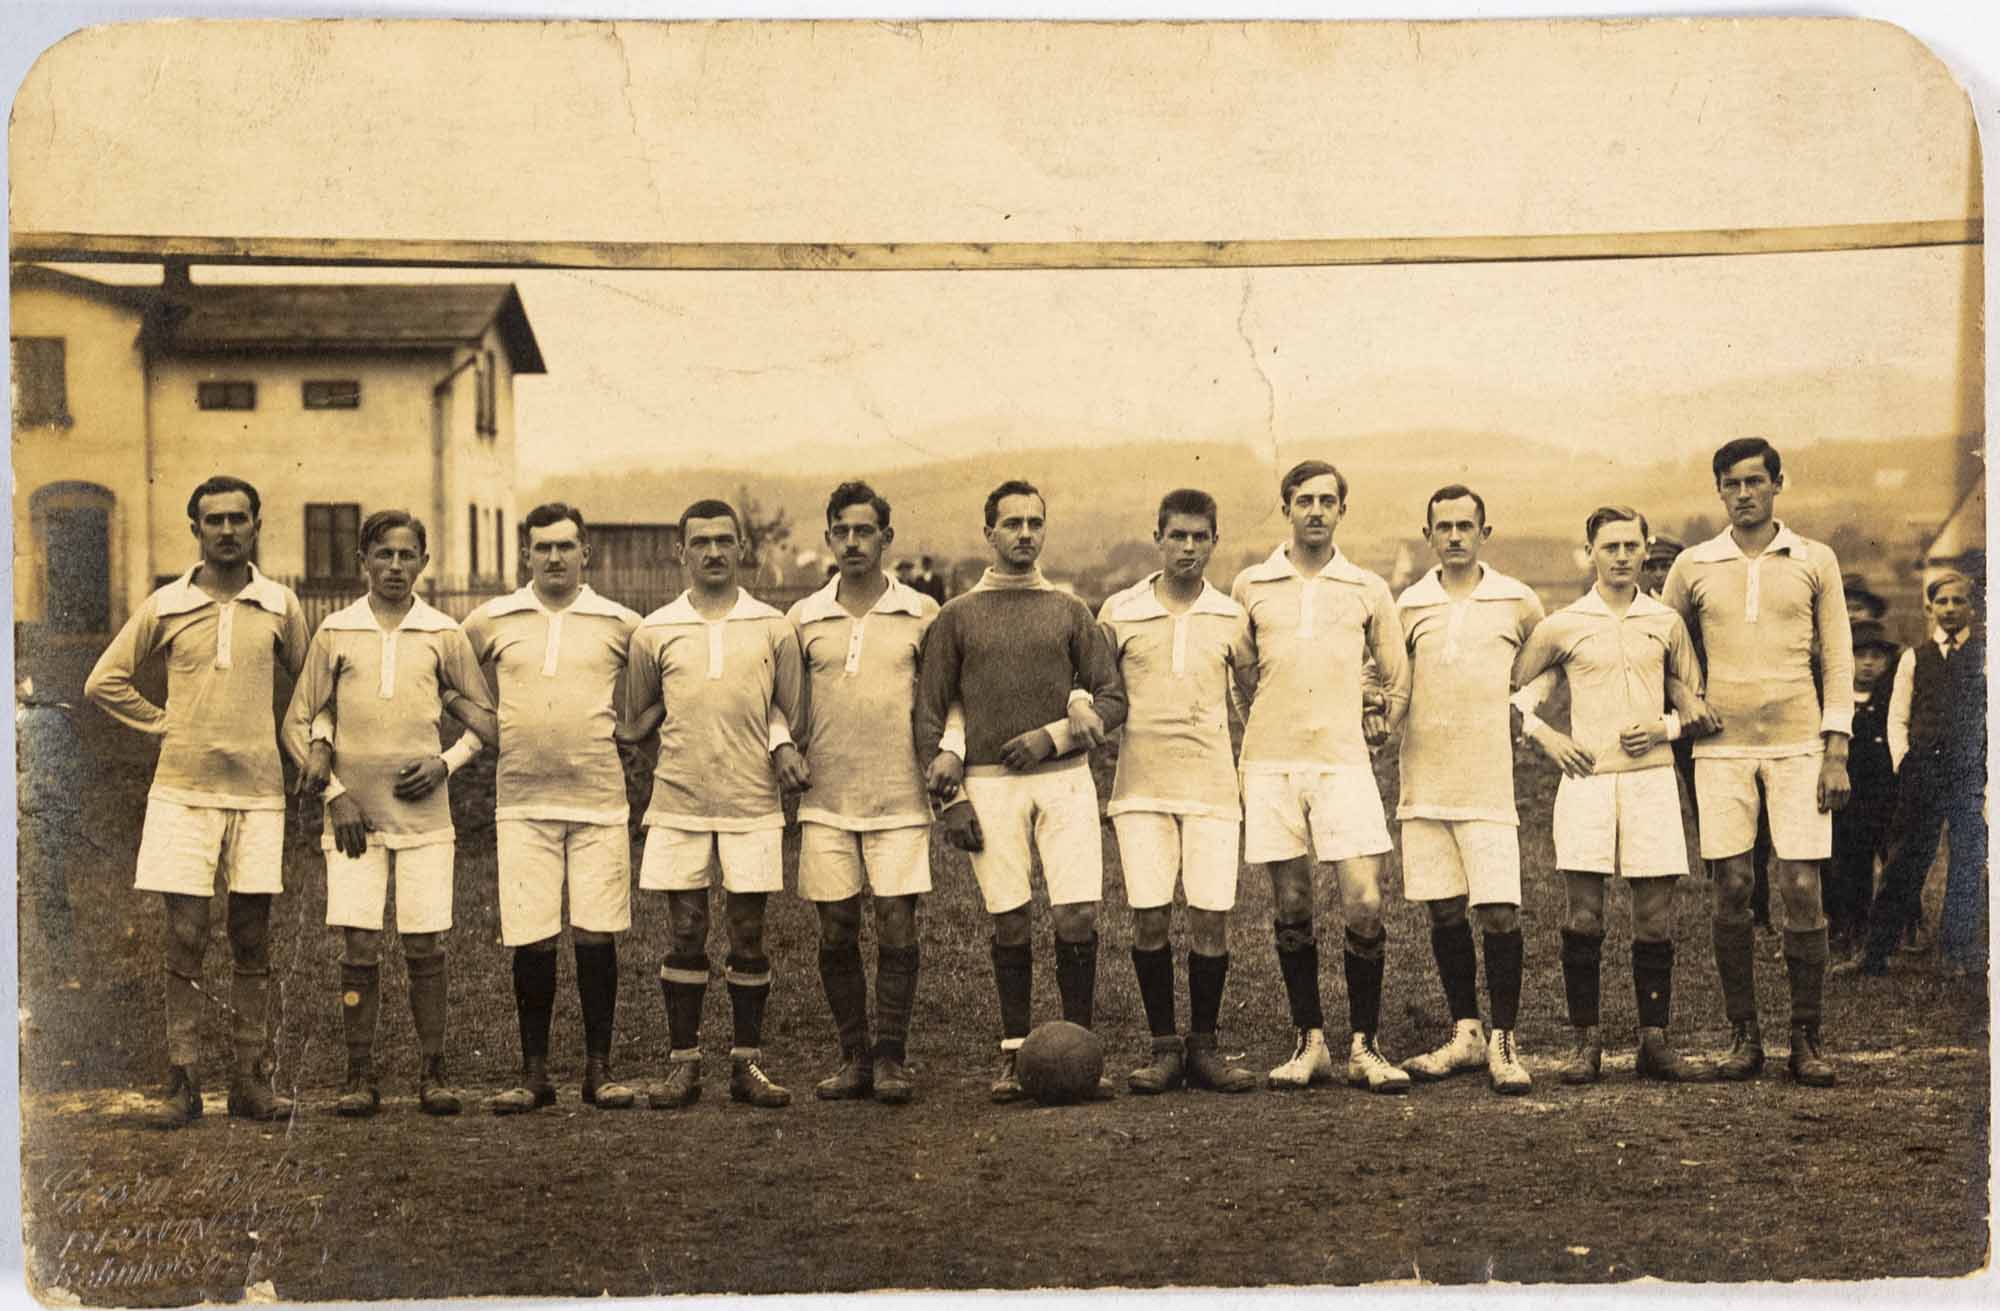 Dobová fotografie fotbalového týmu, 1920